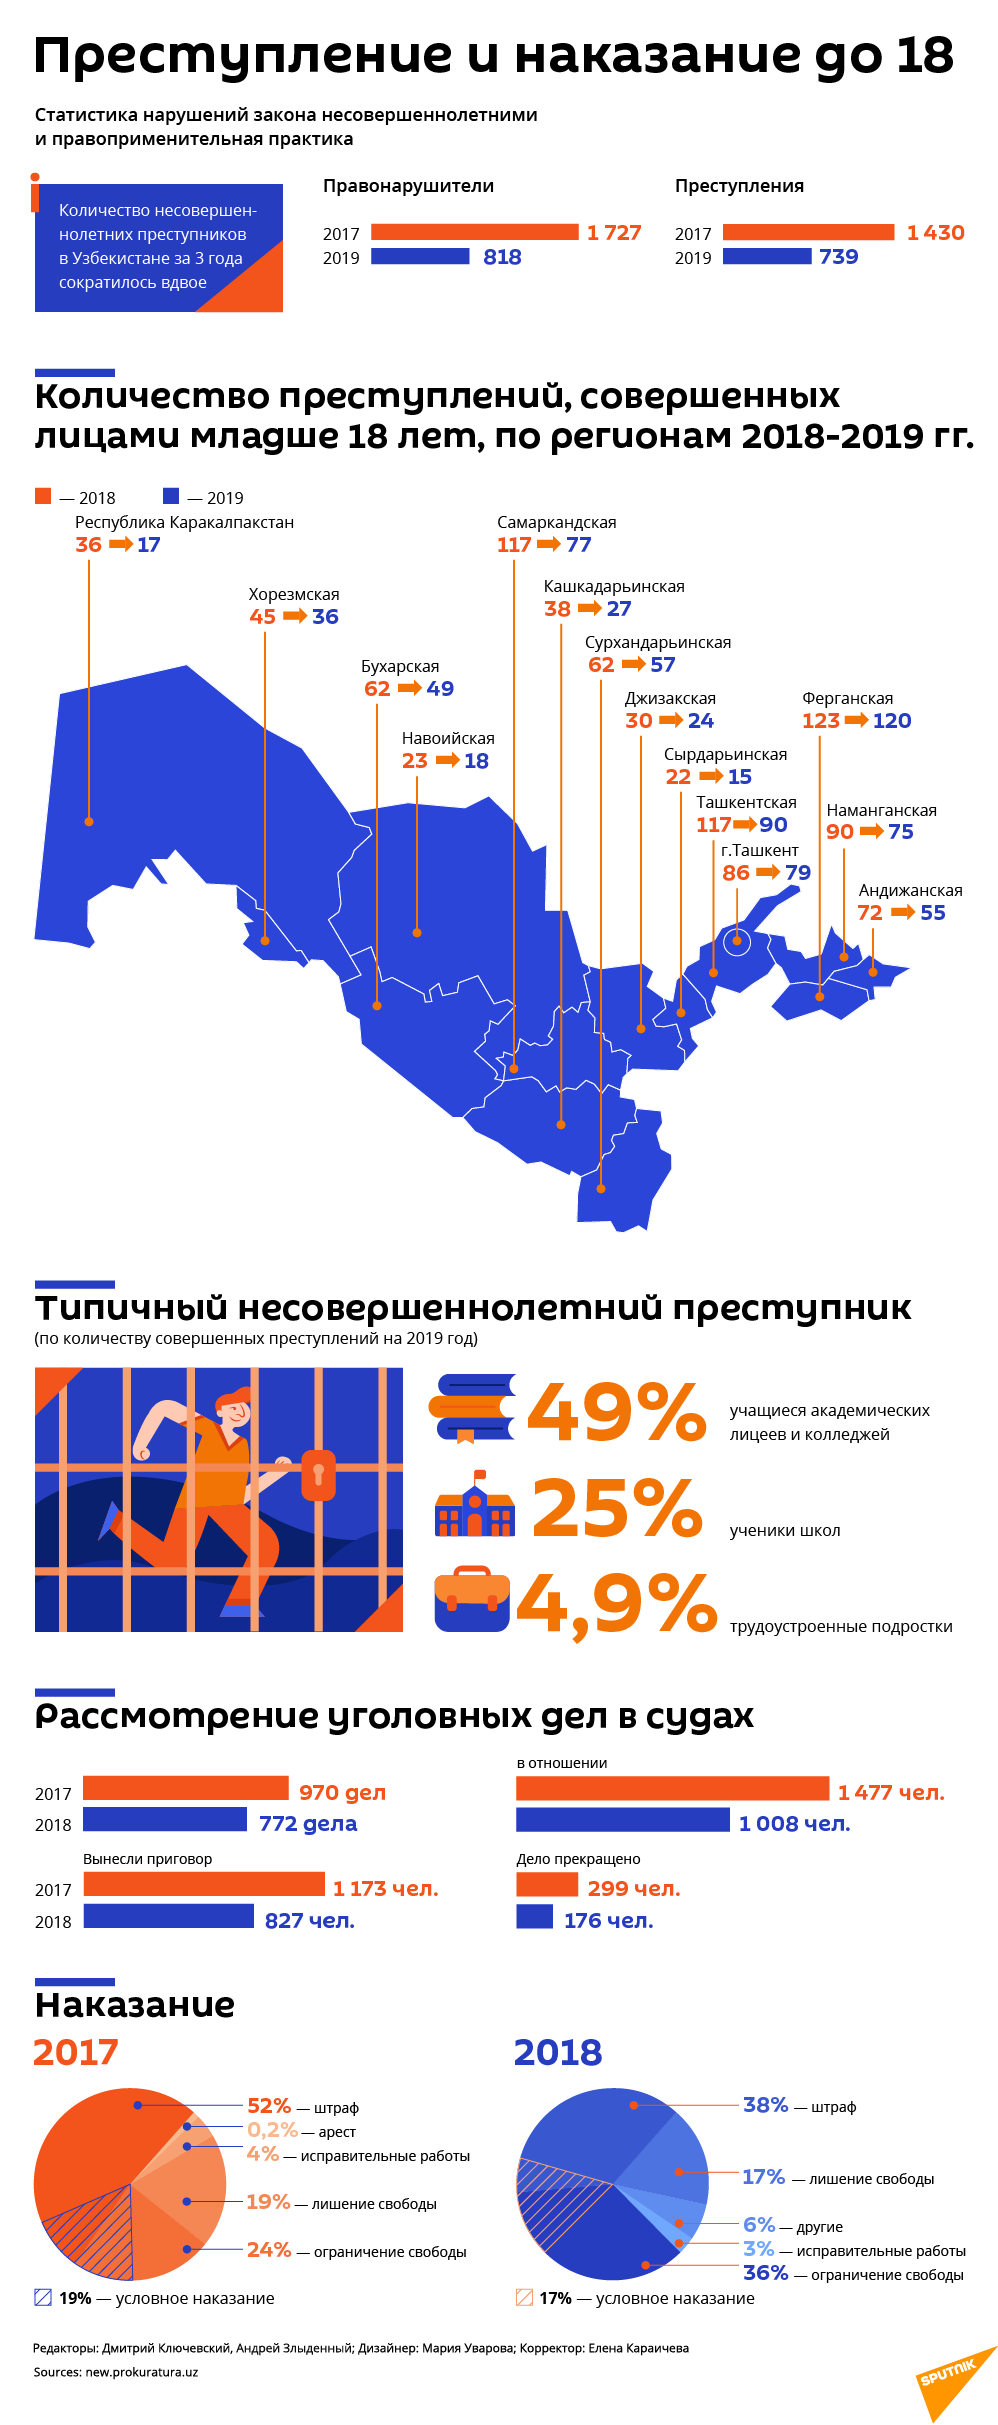 Статистика детской преступности в Узбекистане за последние 3 года - Sputnik Узбекистан